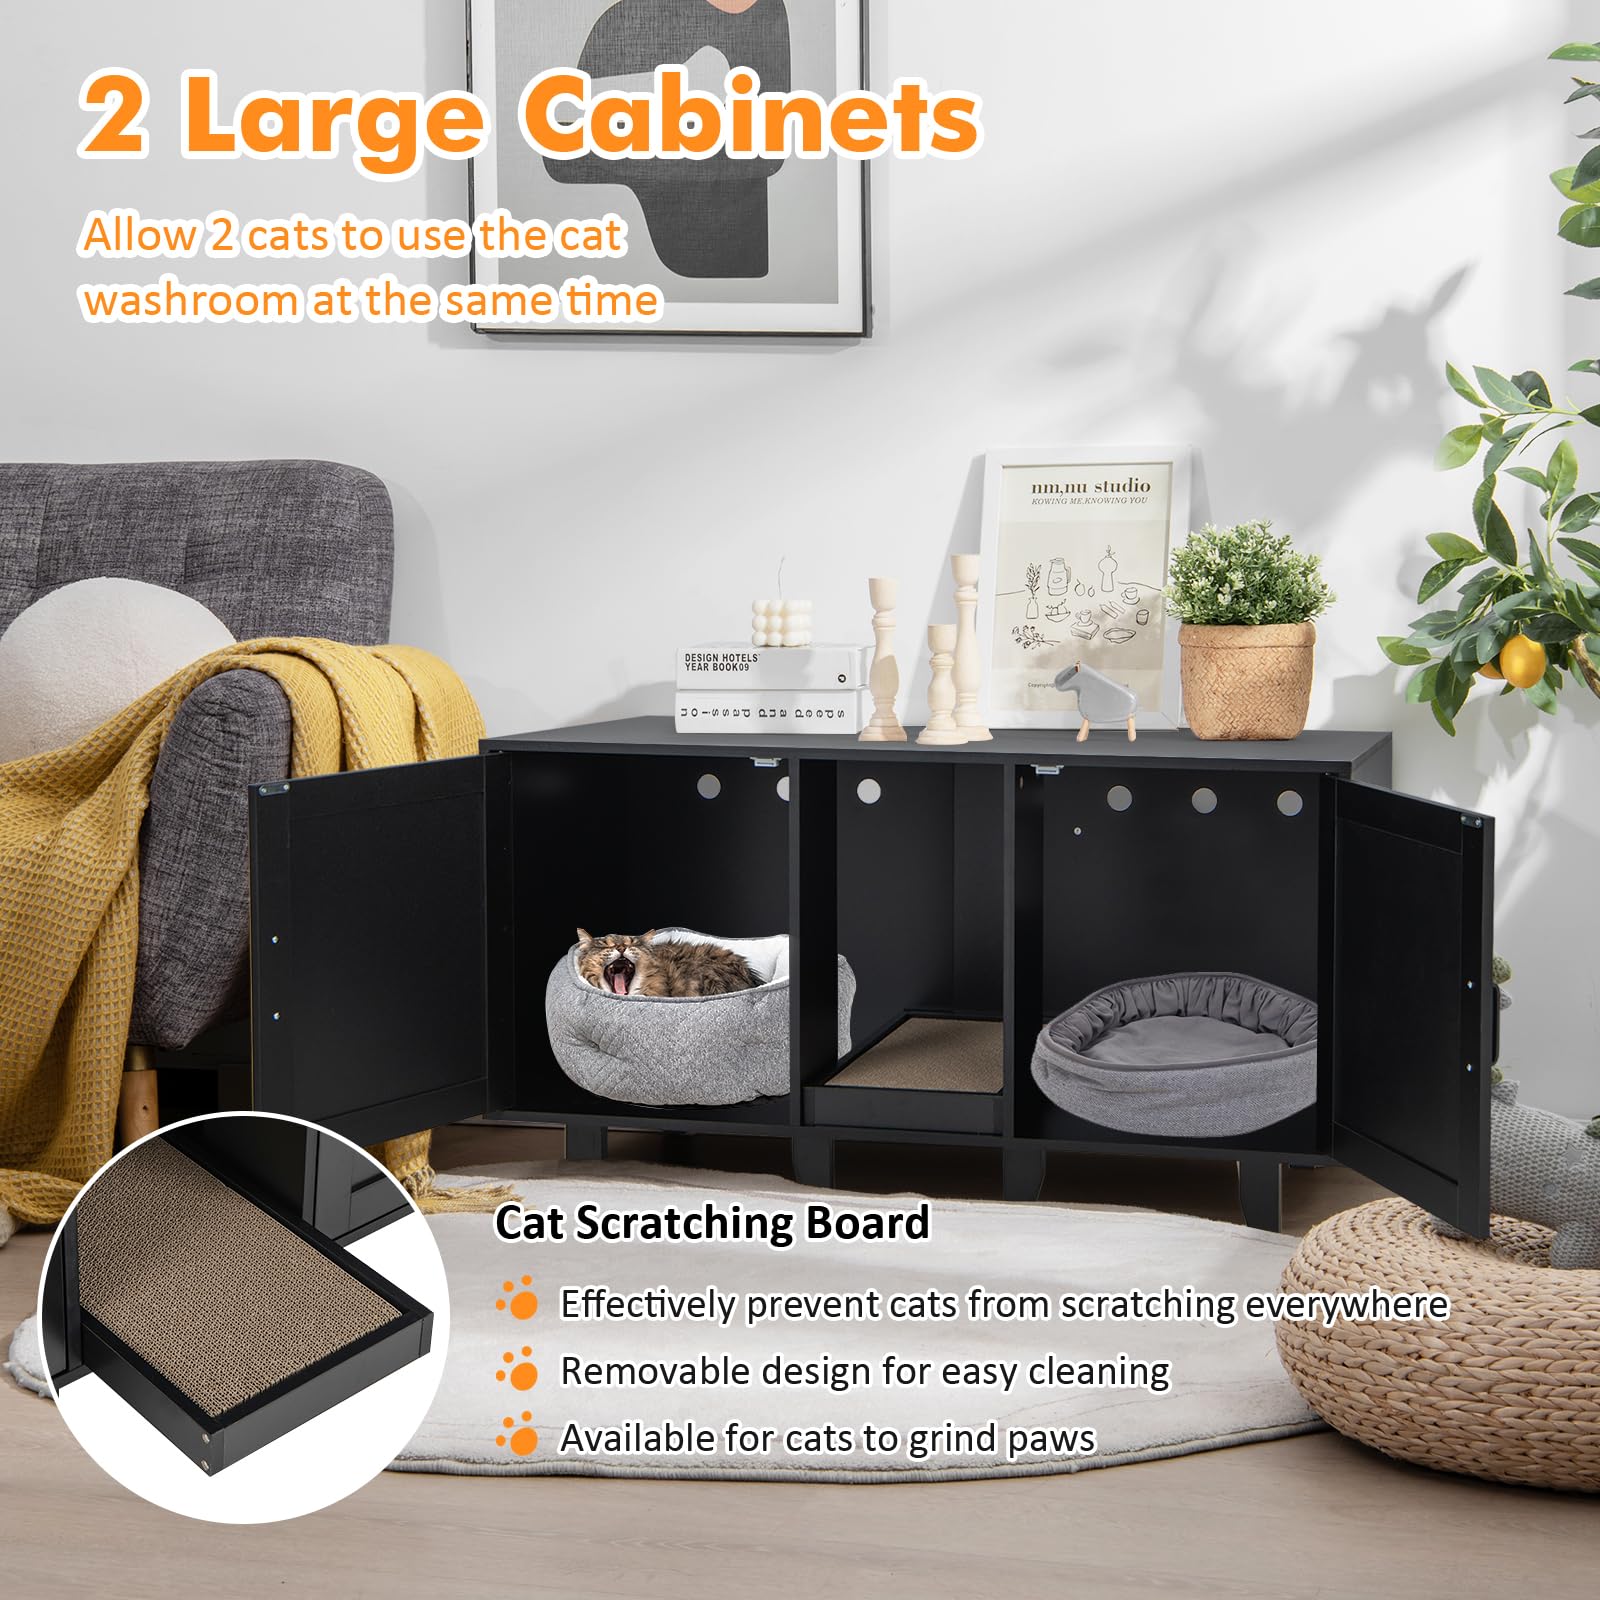 Giantex Cat Litter Box Enclosure - Cat Washroom Hidden Furniture with 2 Storage Cabinets